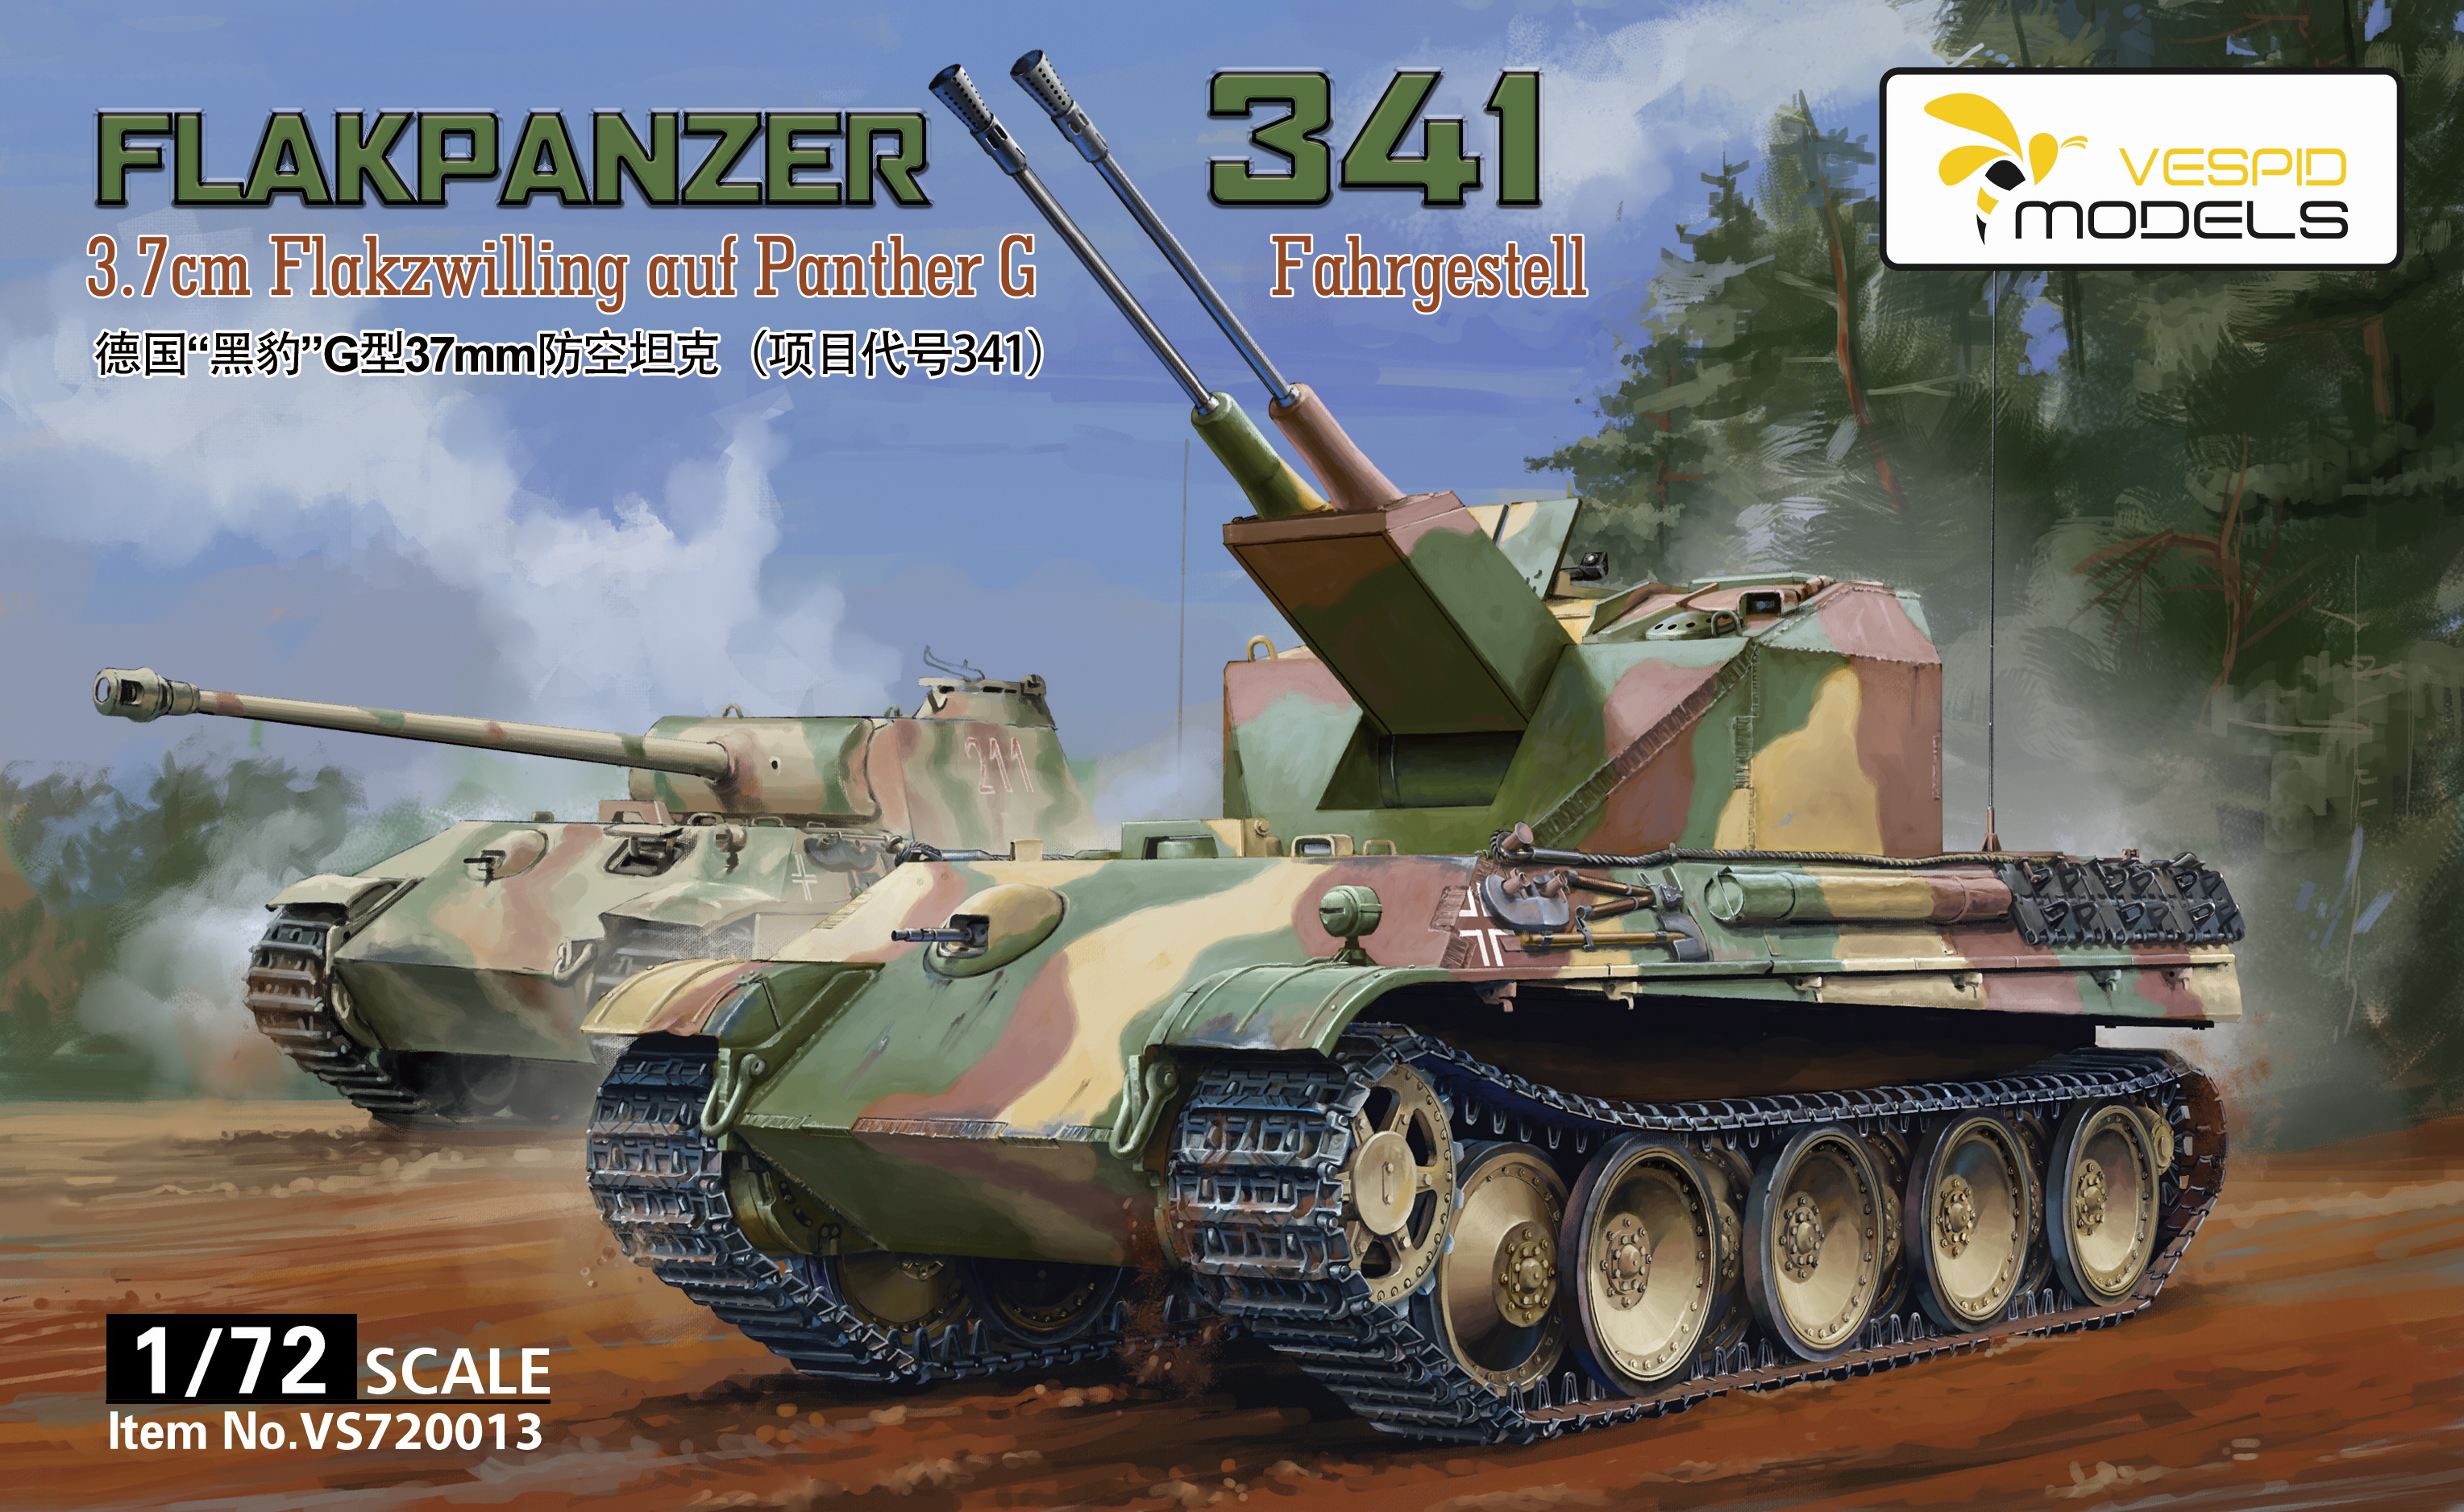 3.7cm Flakvierling auf Panther G Fahrgestell “Flakpanzer 341”